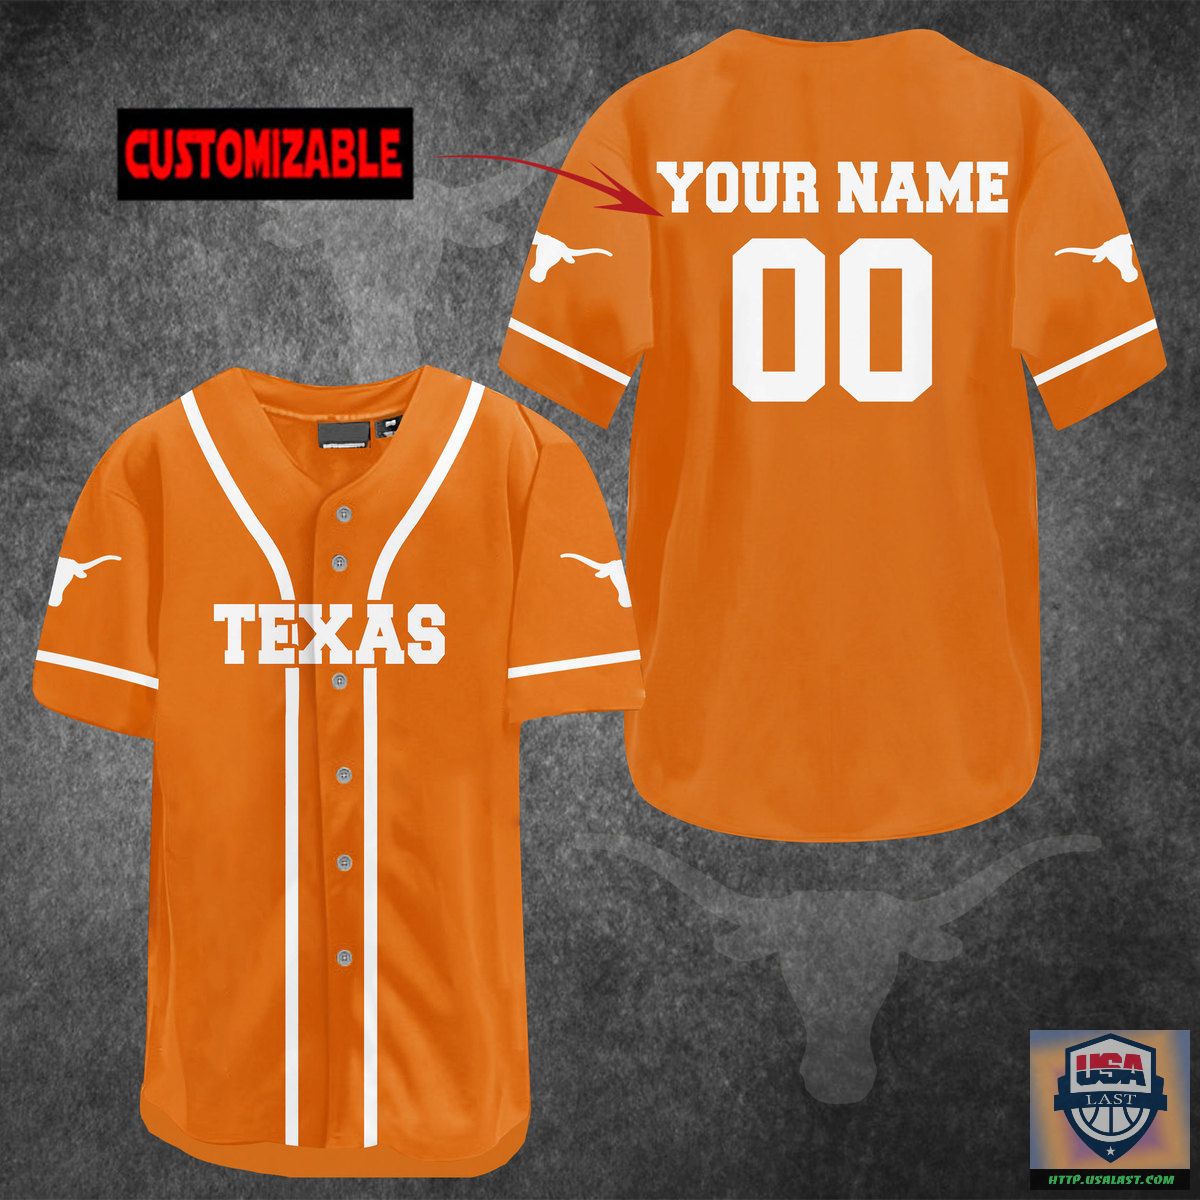 Official Texas Longhorns Personalized Baseball Jersey Shirt